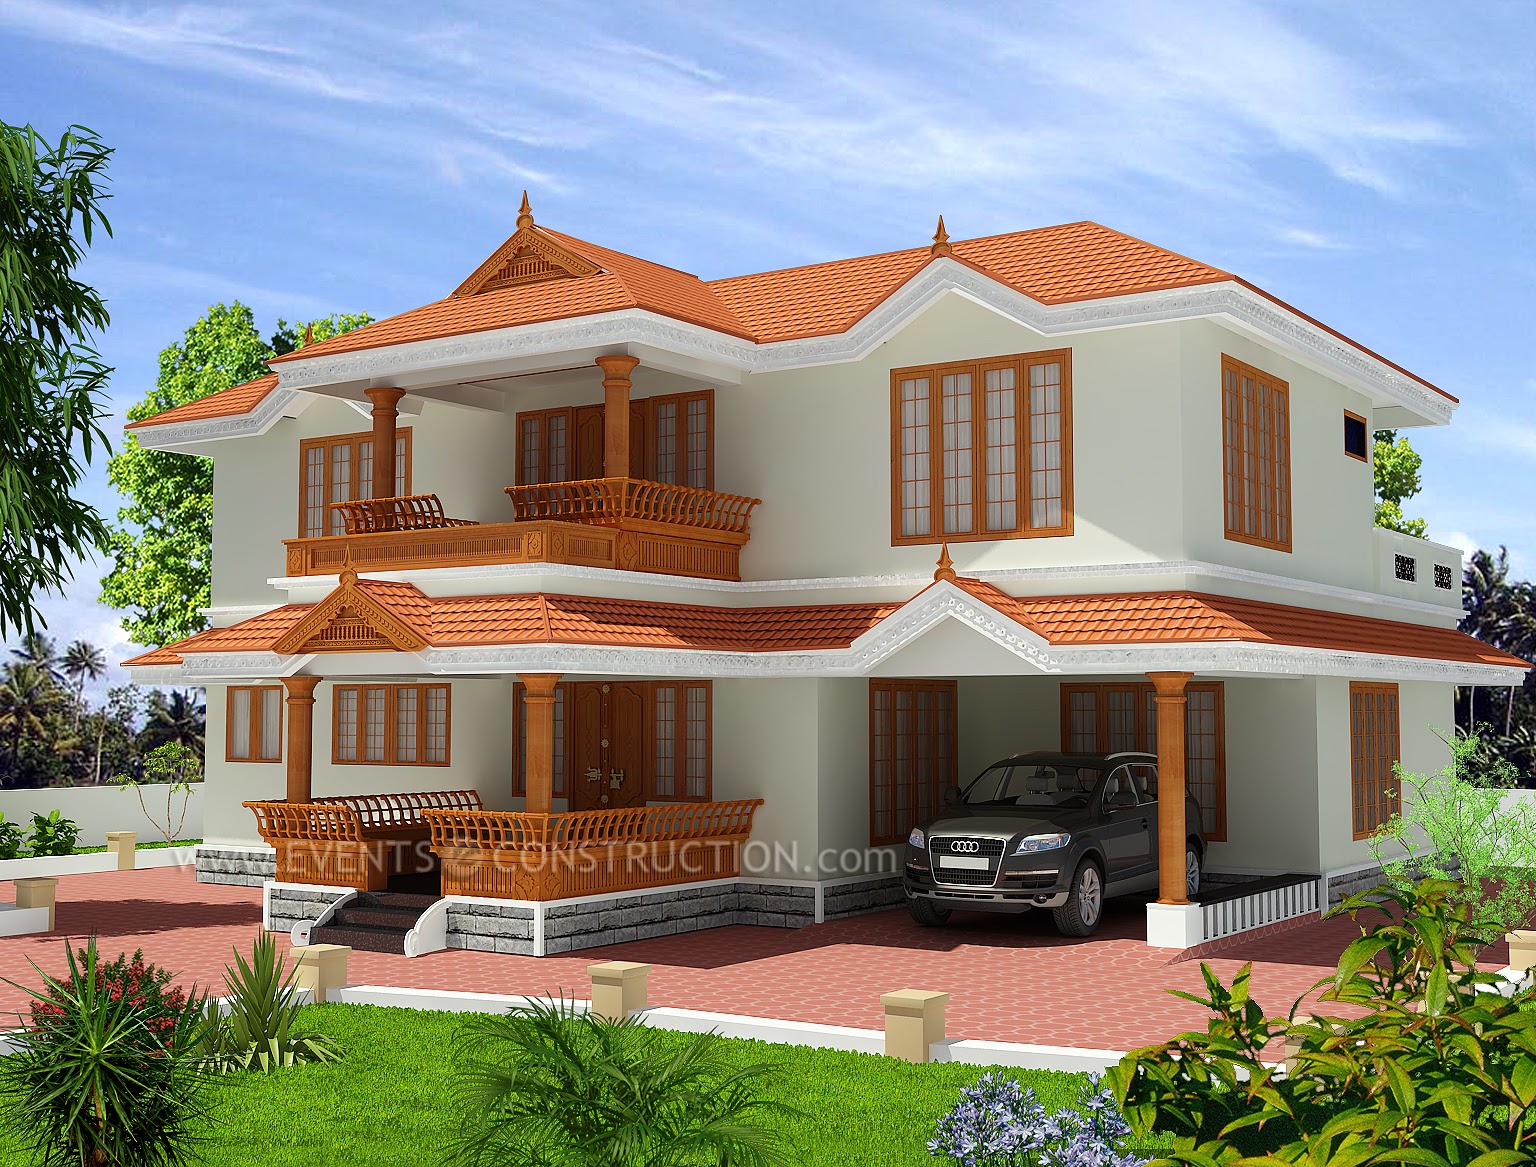 Traditional Kerala home in 2346 SqFt - living room interiors pdf